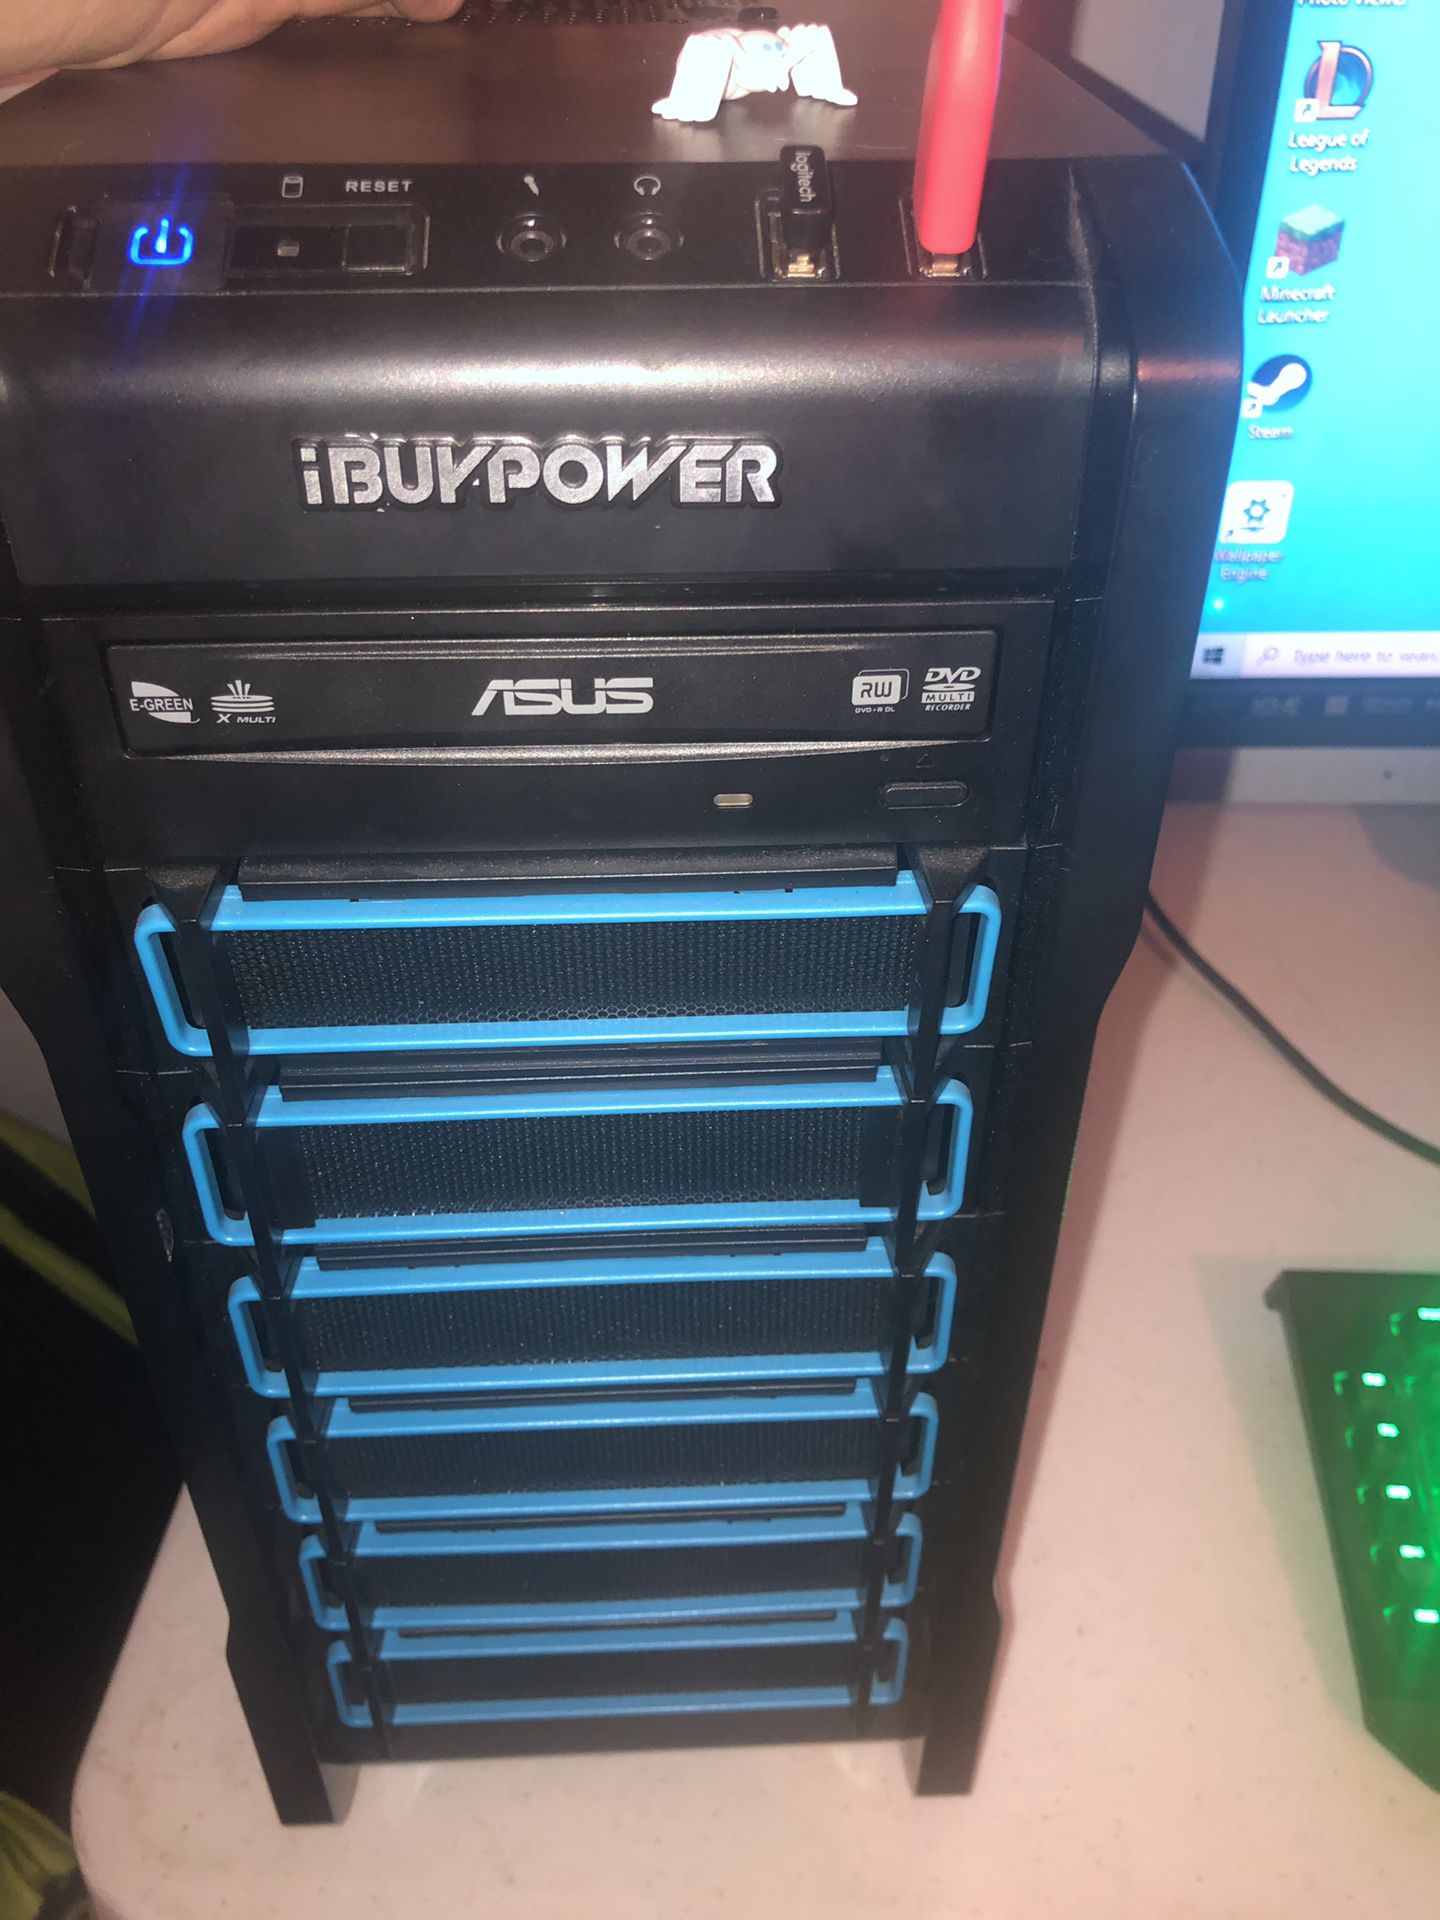 iBuy power gaming computer